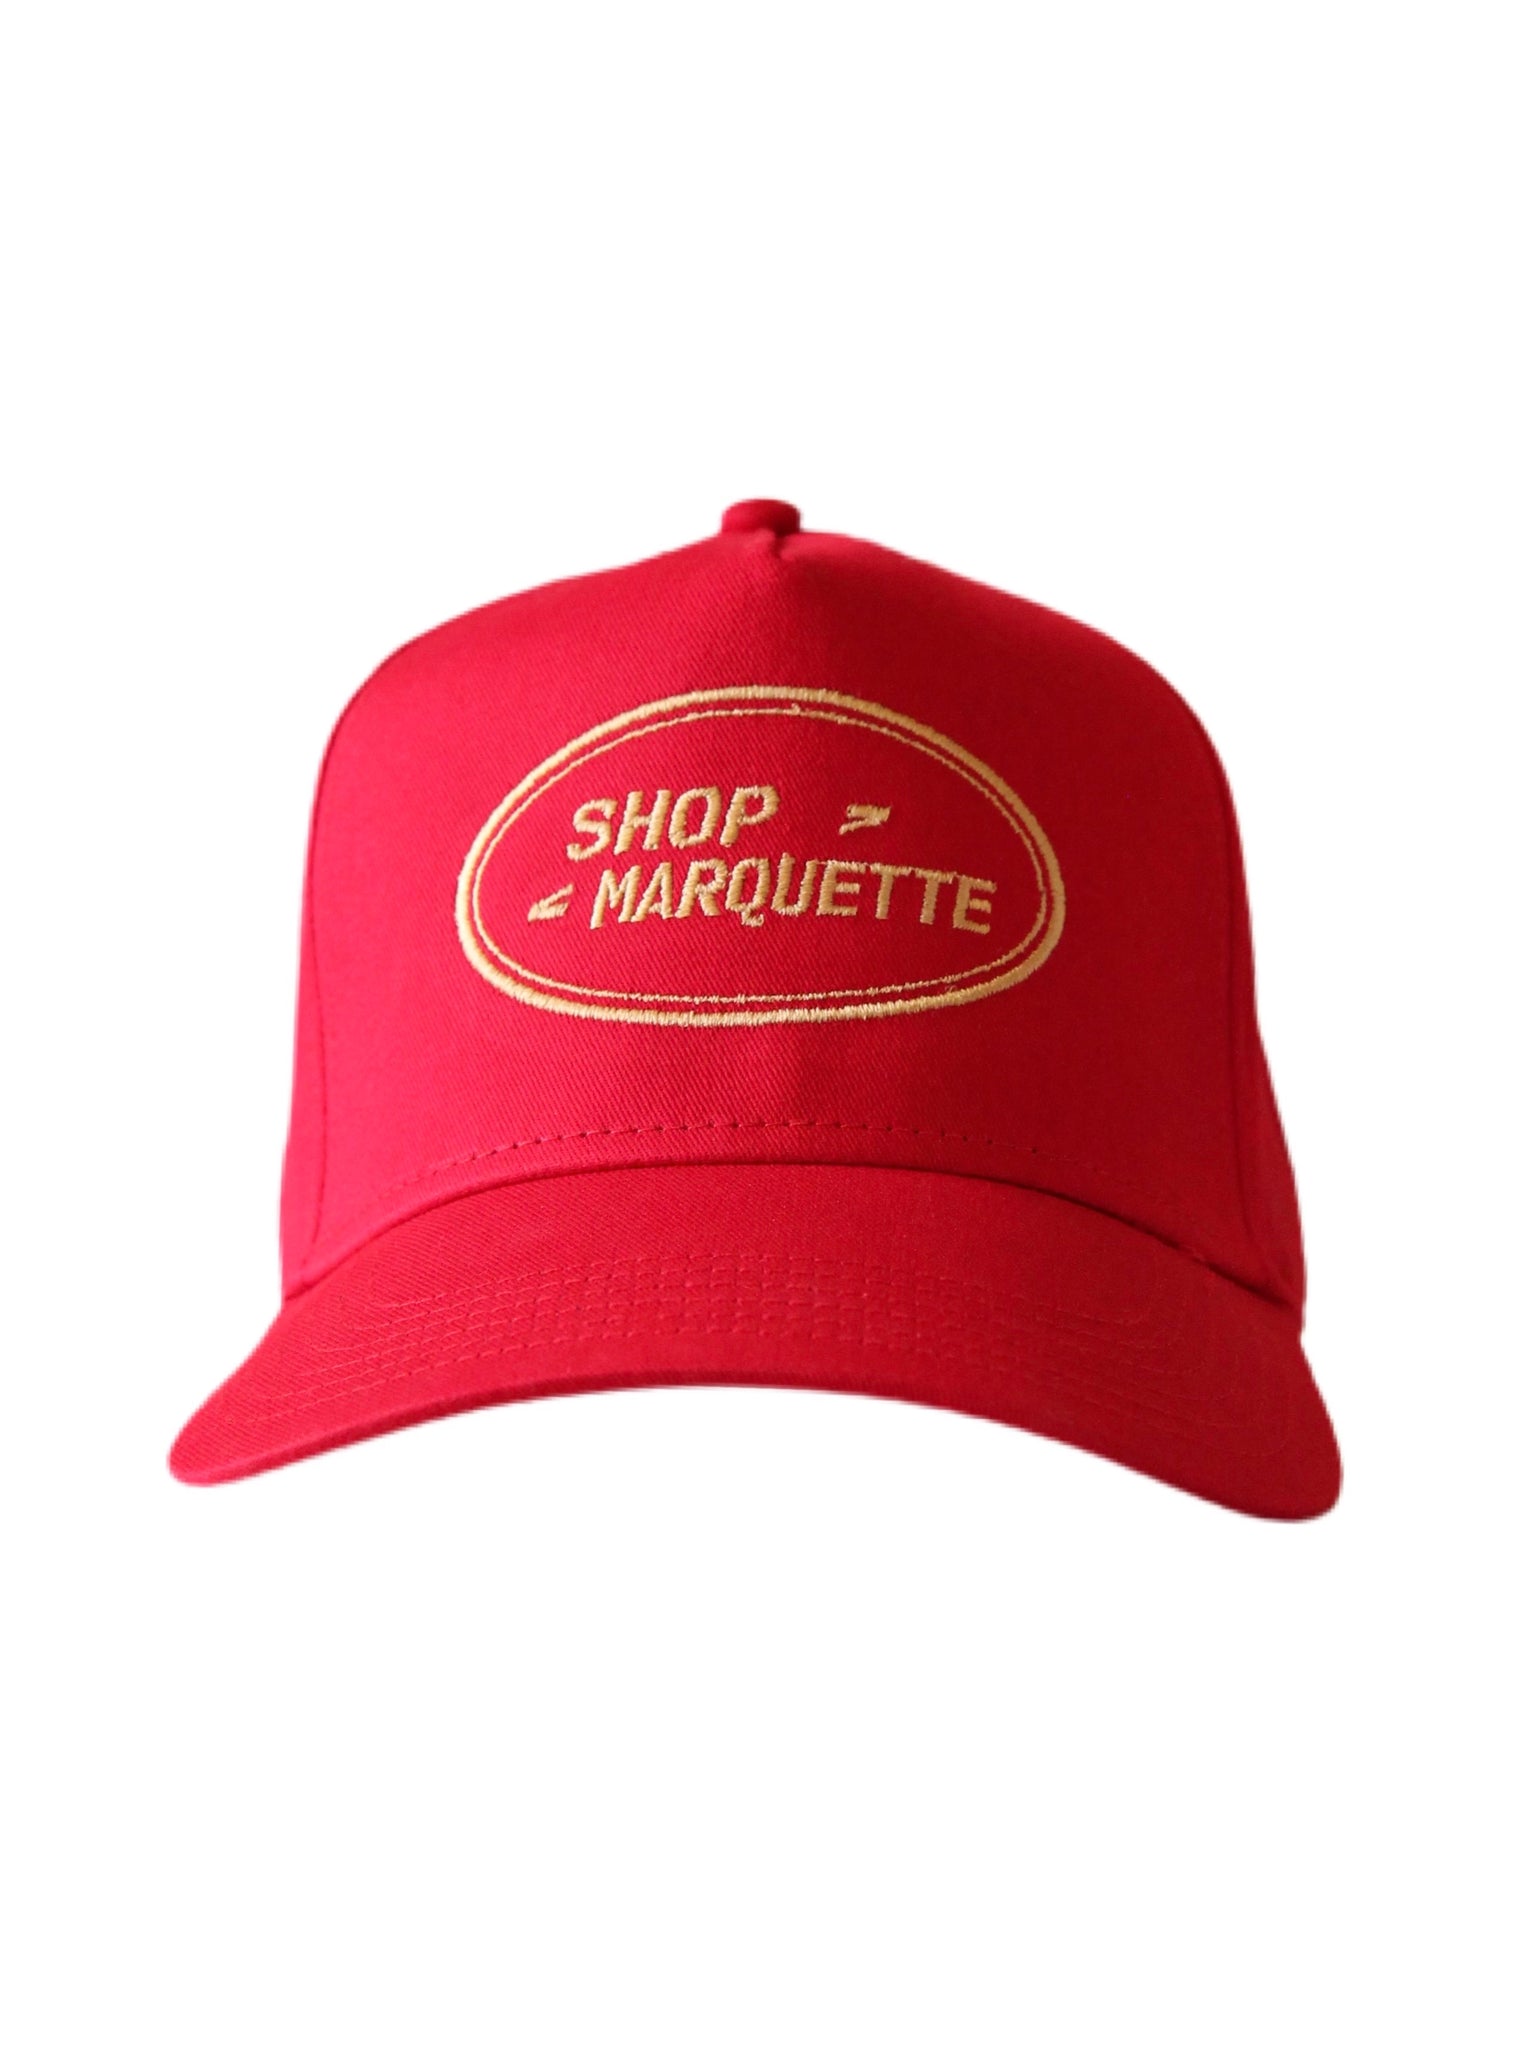 Marquette Trucker Hat-Red